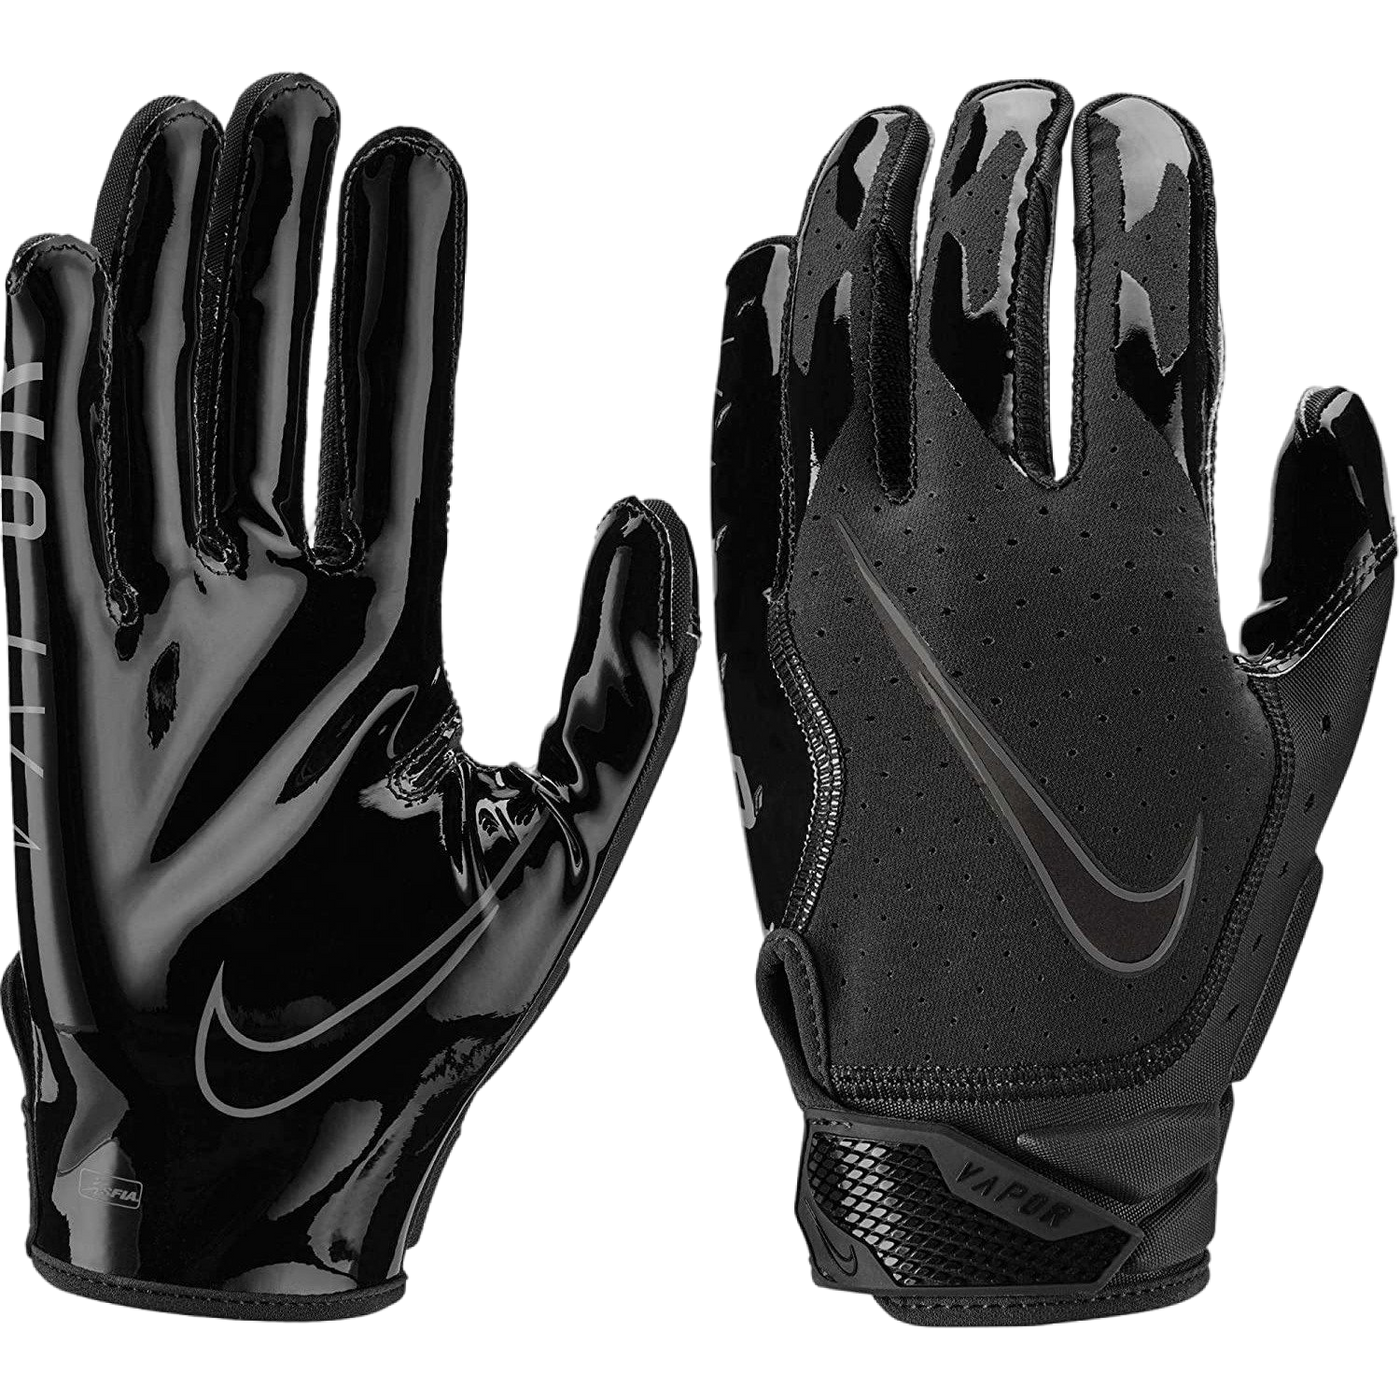 Nike Vapor Jet 6.0 - Premium Football Gloves from Nike - Shop now at Reyrr Athletics